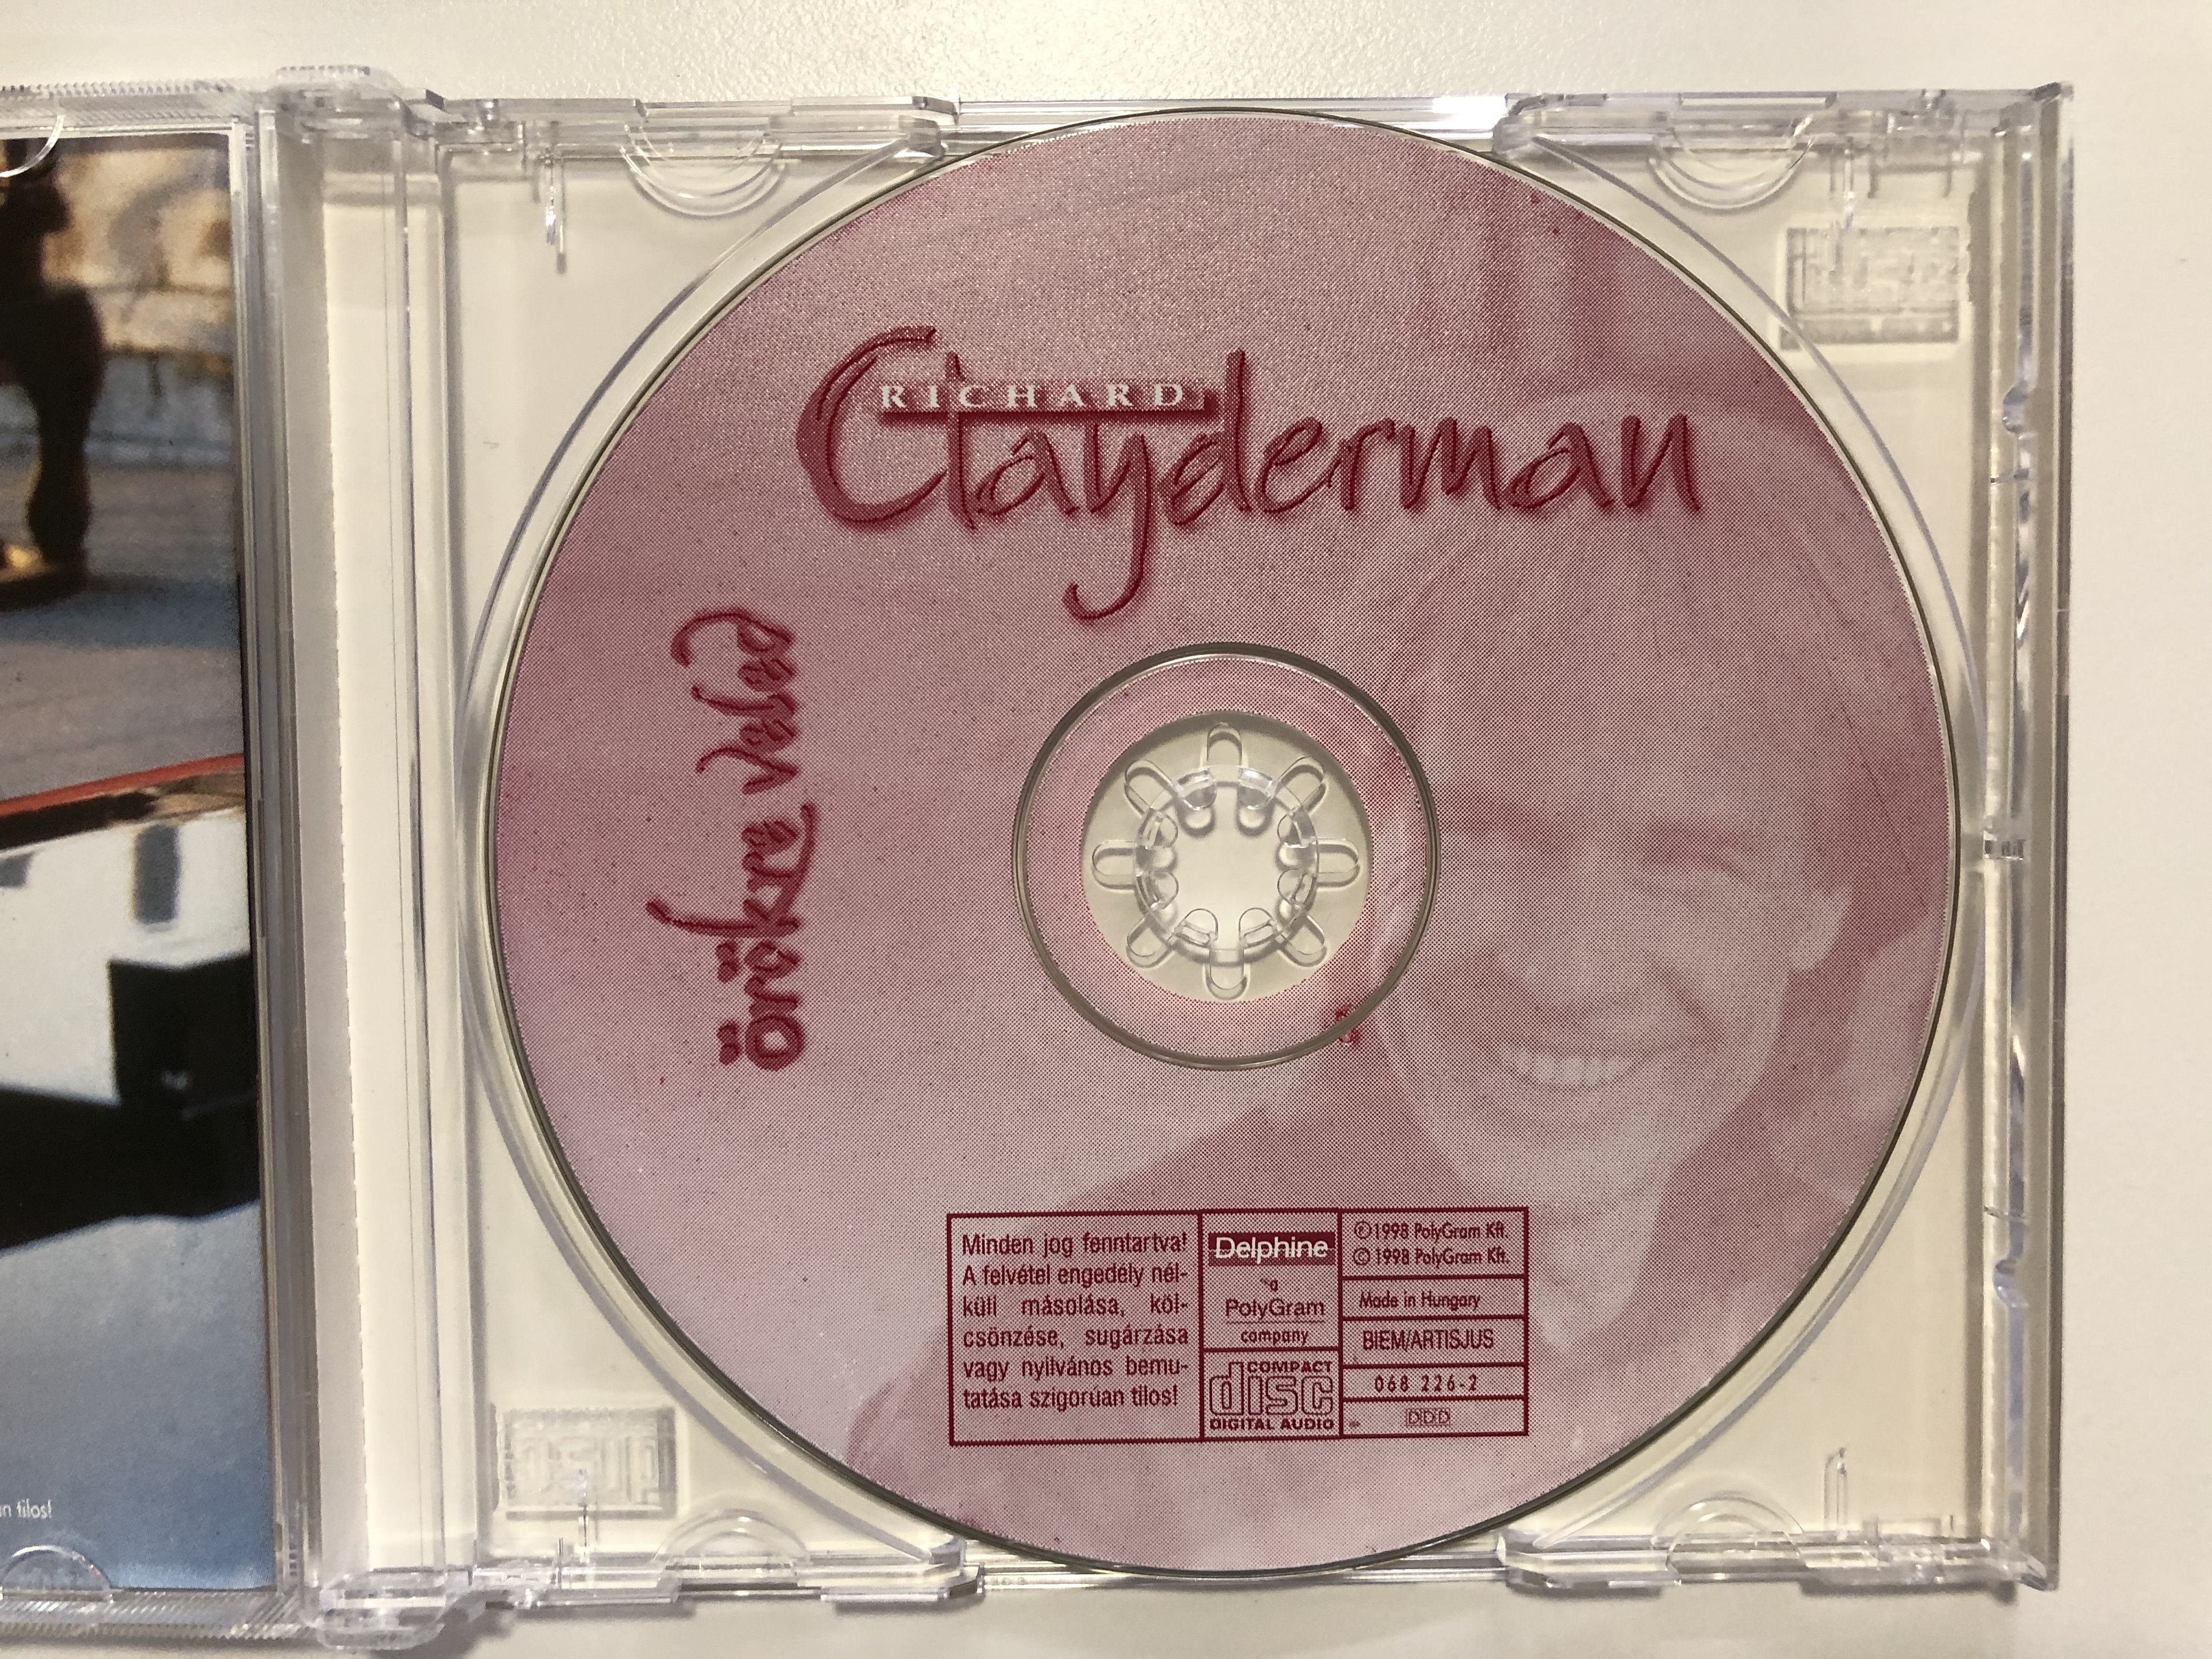 richard-clayderman-orokre-veled-polygram-audio-cd-1998-068-226-2-3-.jpg